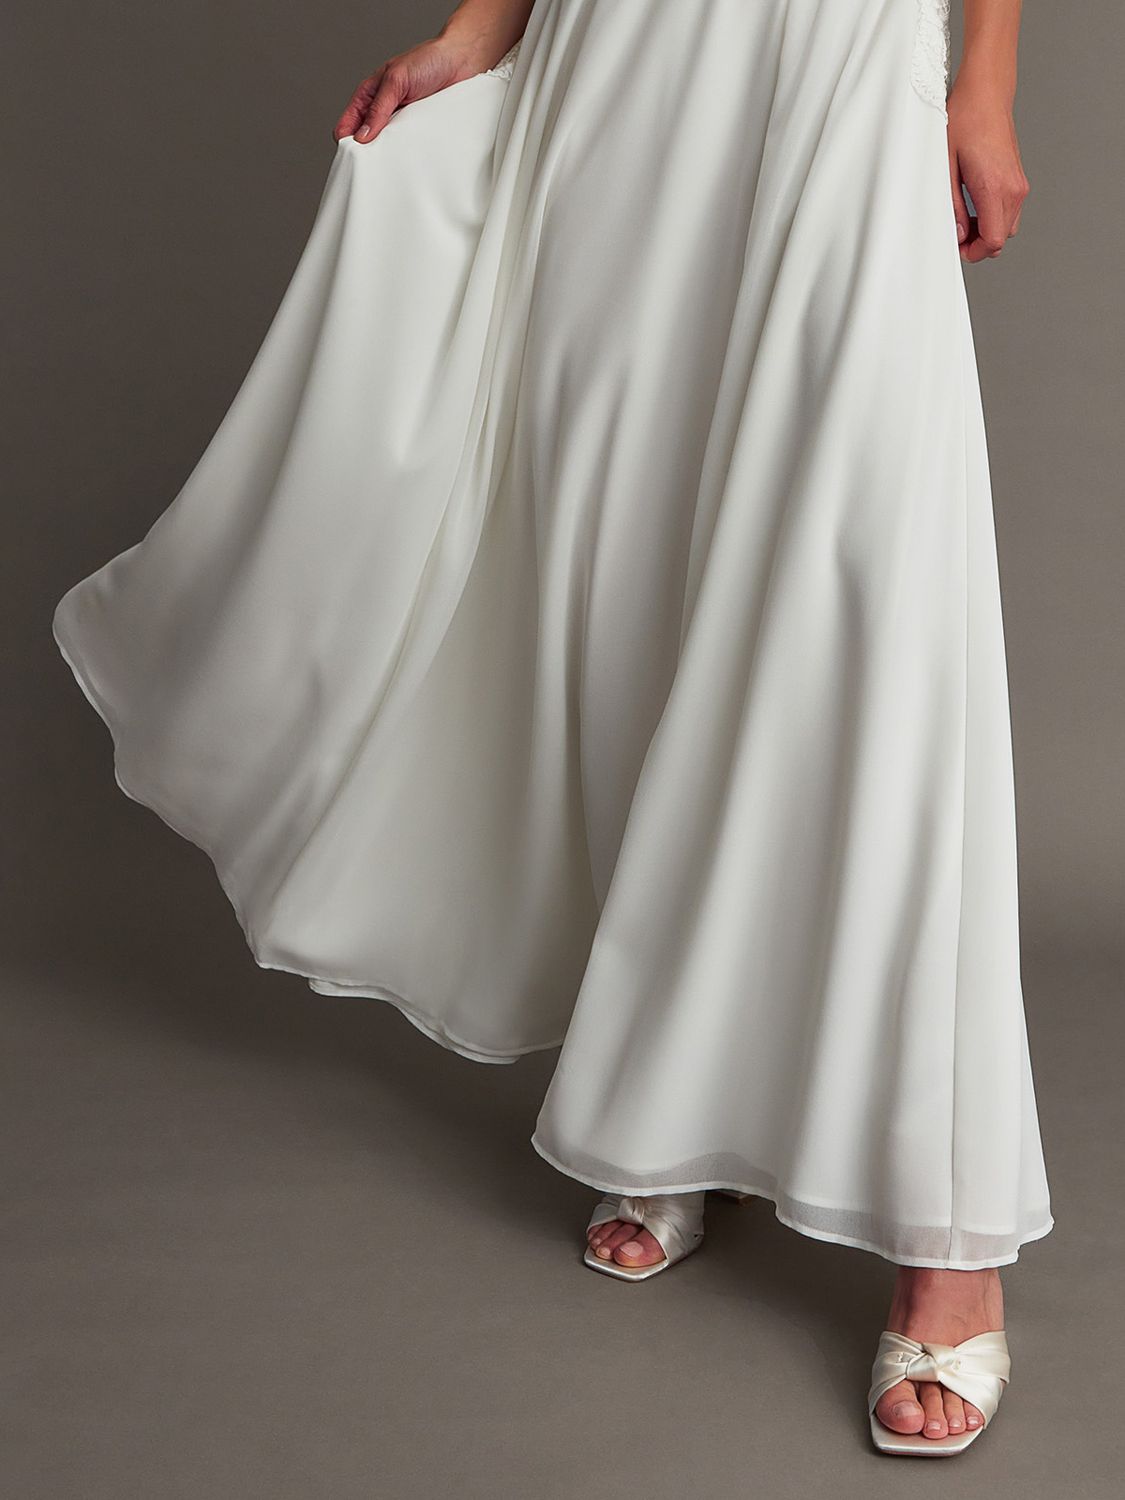 Buy Monsoon Maddie Lace Bardot Maxi Dress, Ivory Online at johnlewis.com